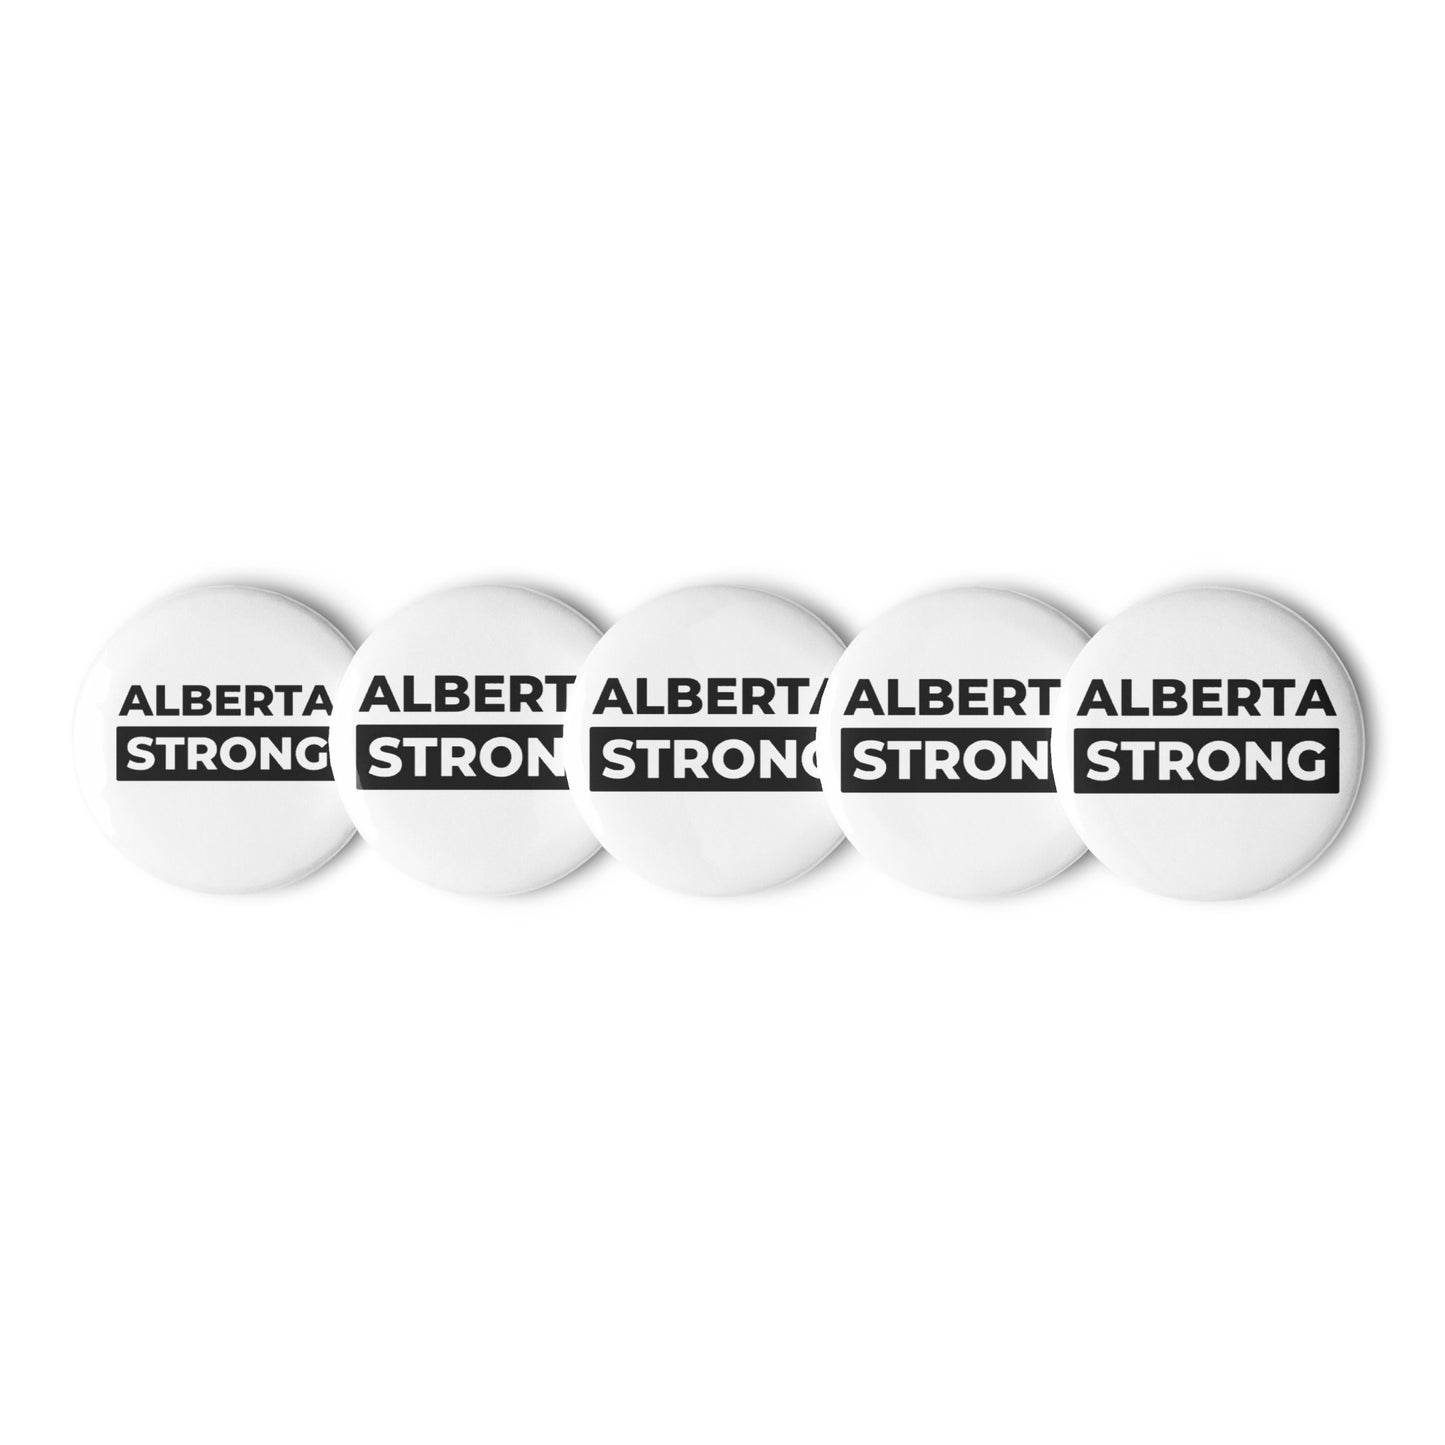 Keep Alberta Free - Set of pin buttons